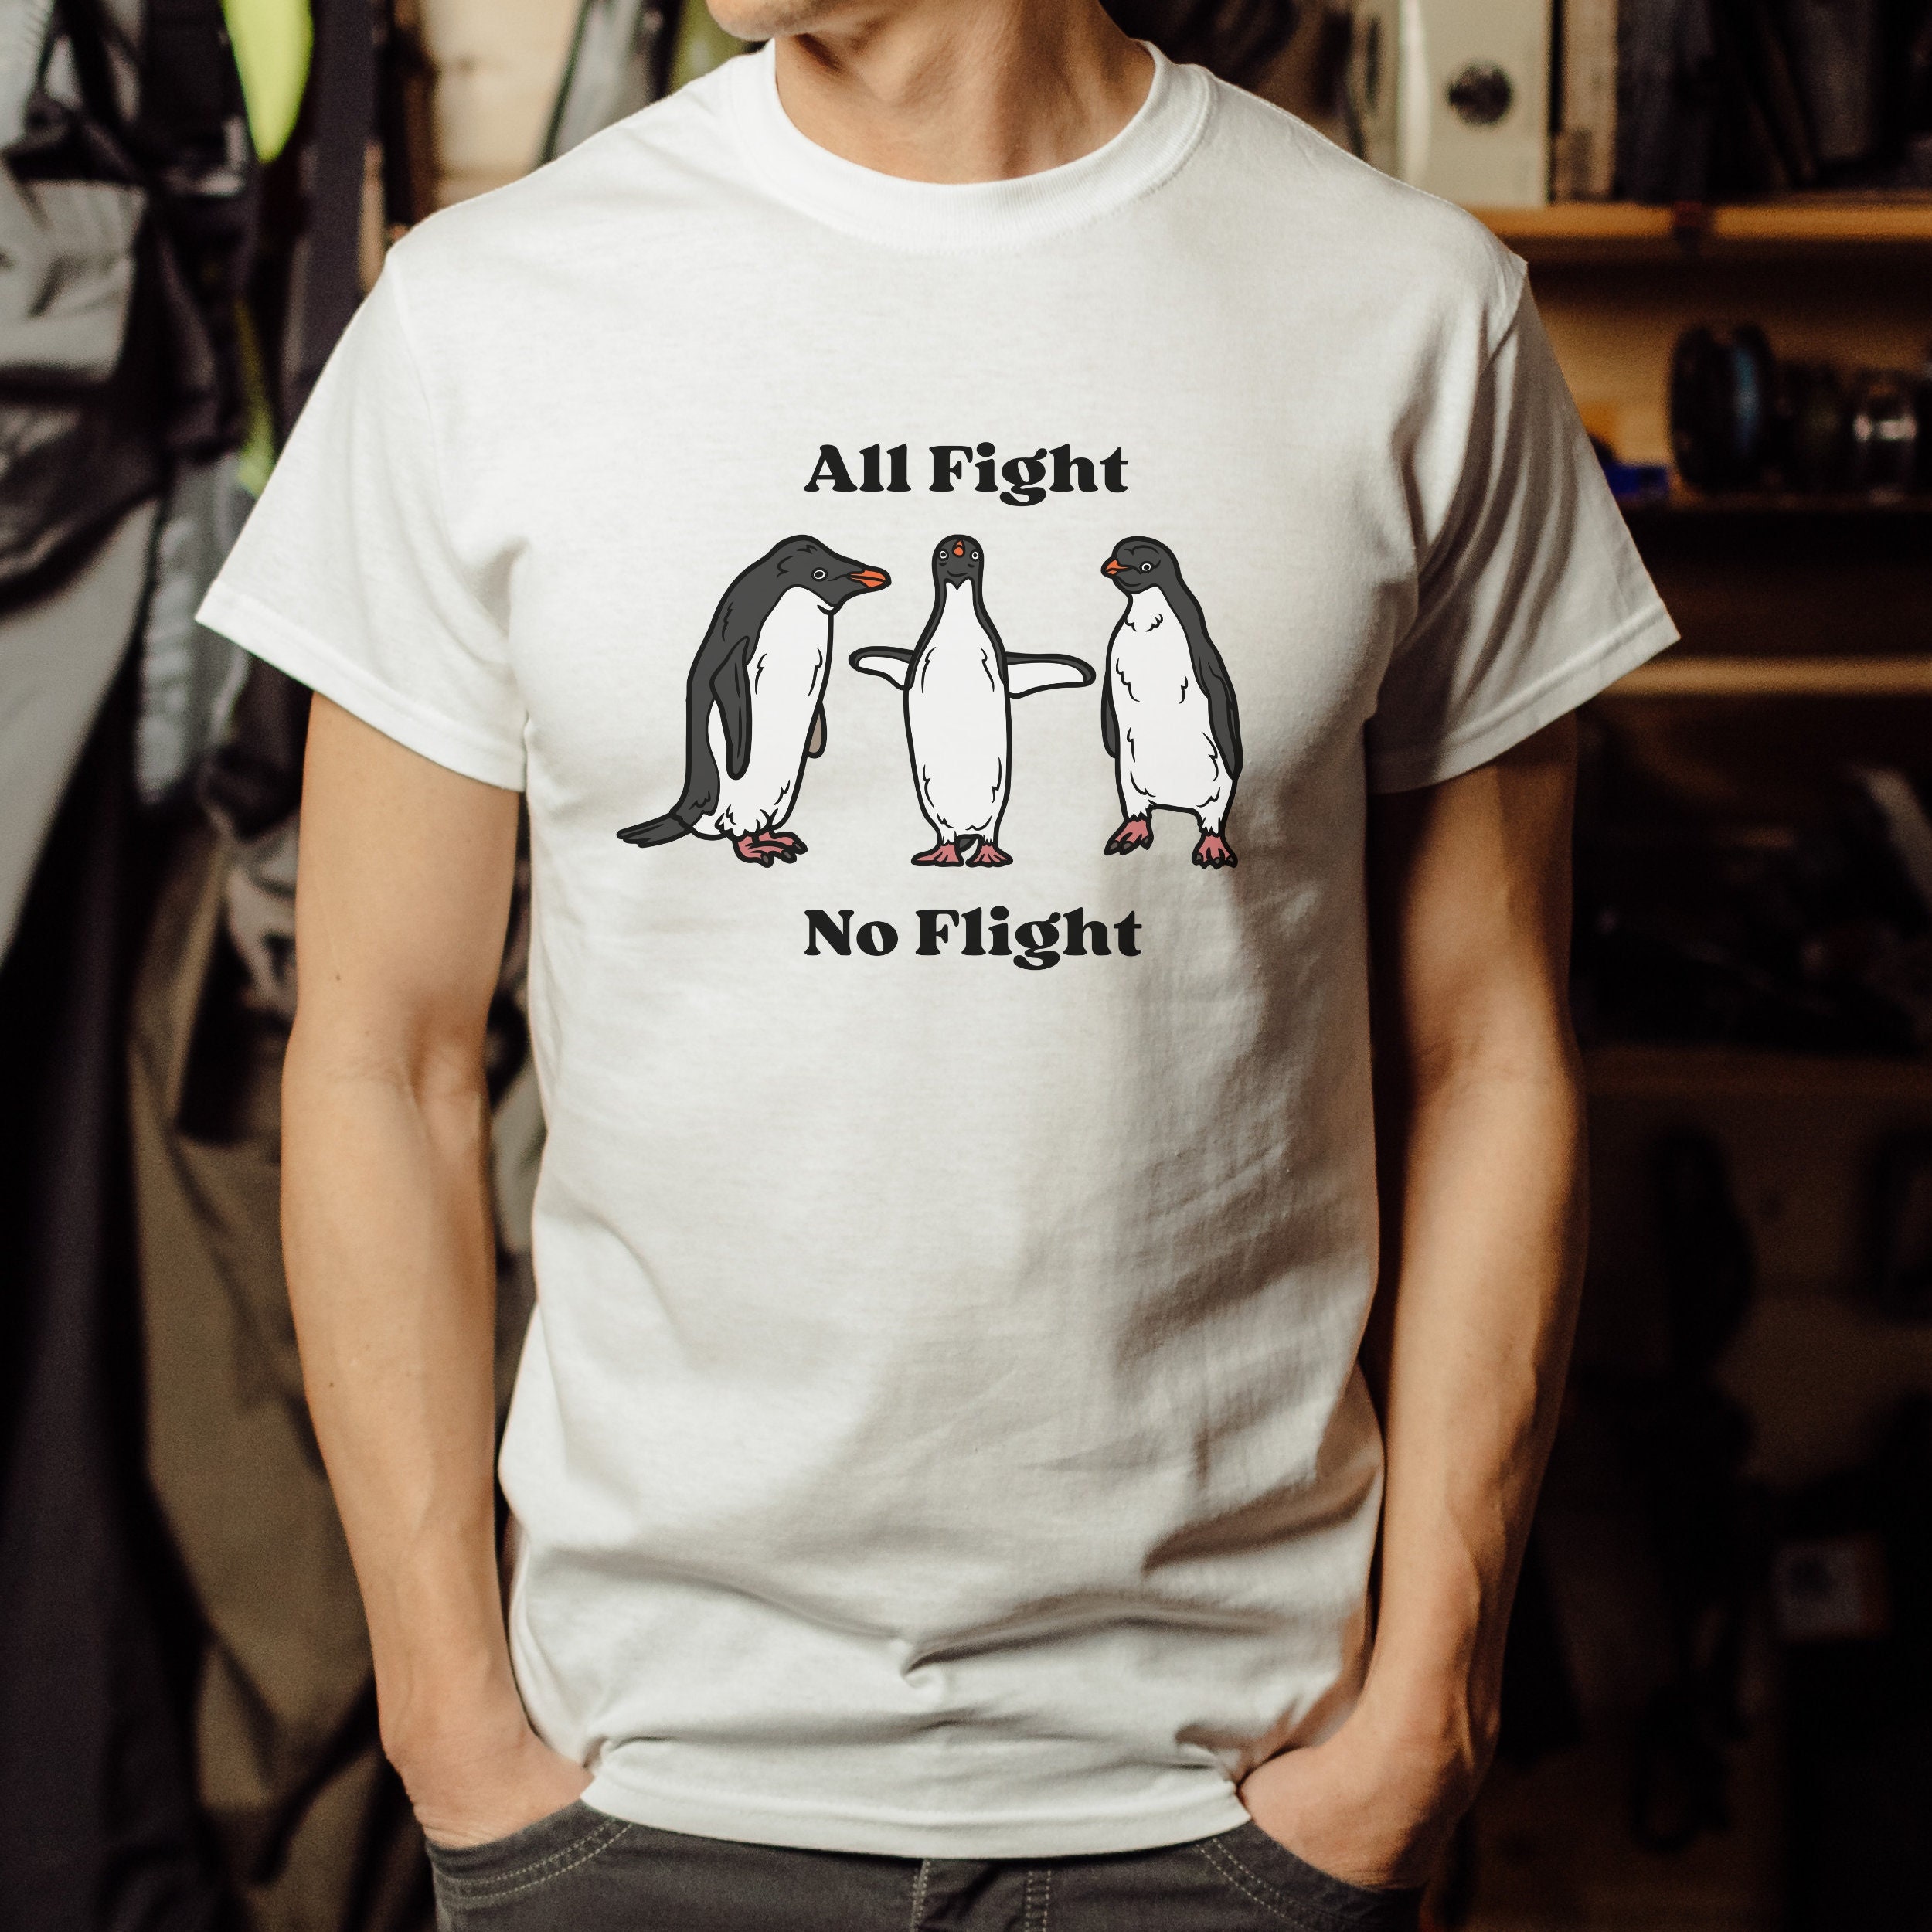 Funny Shirts Penguins, Penguin Meme Shirt, Cotton Pingu Shirt